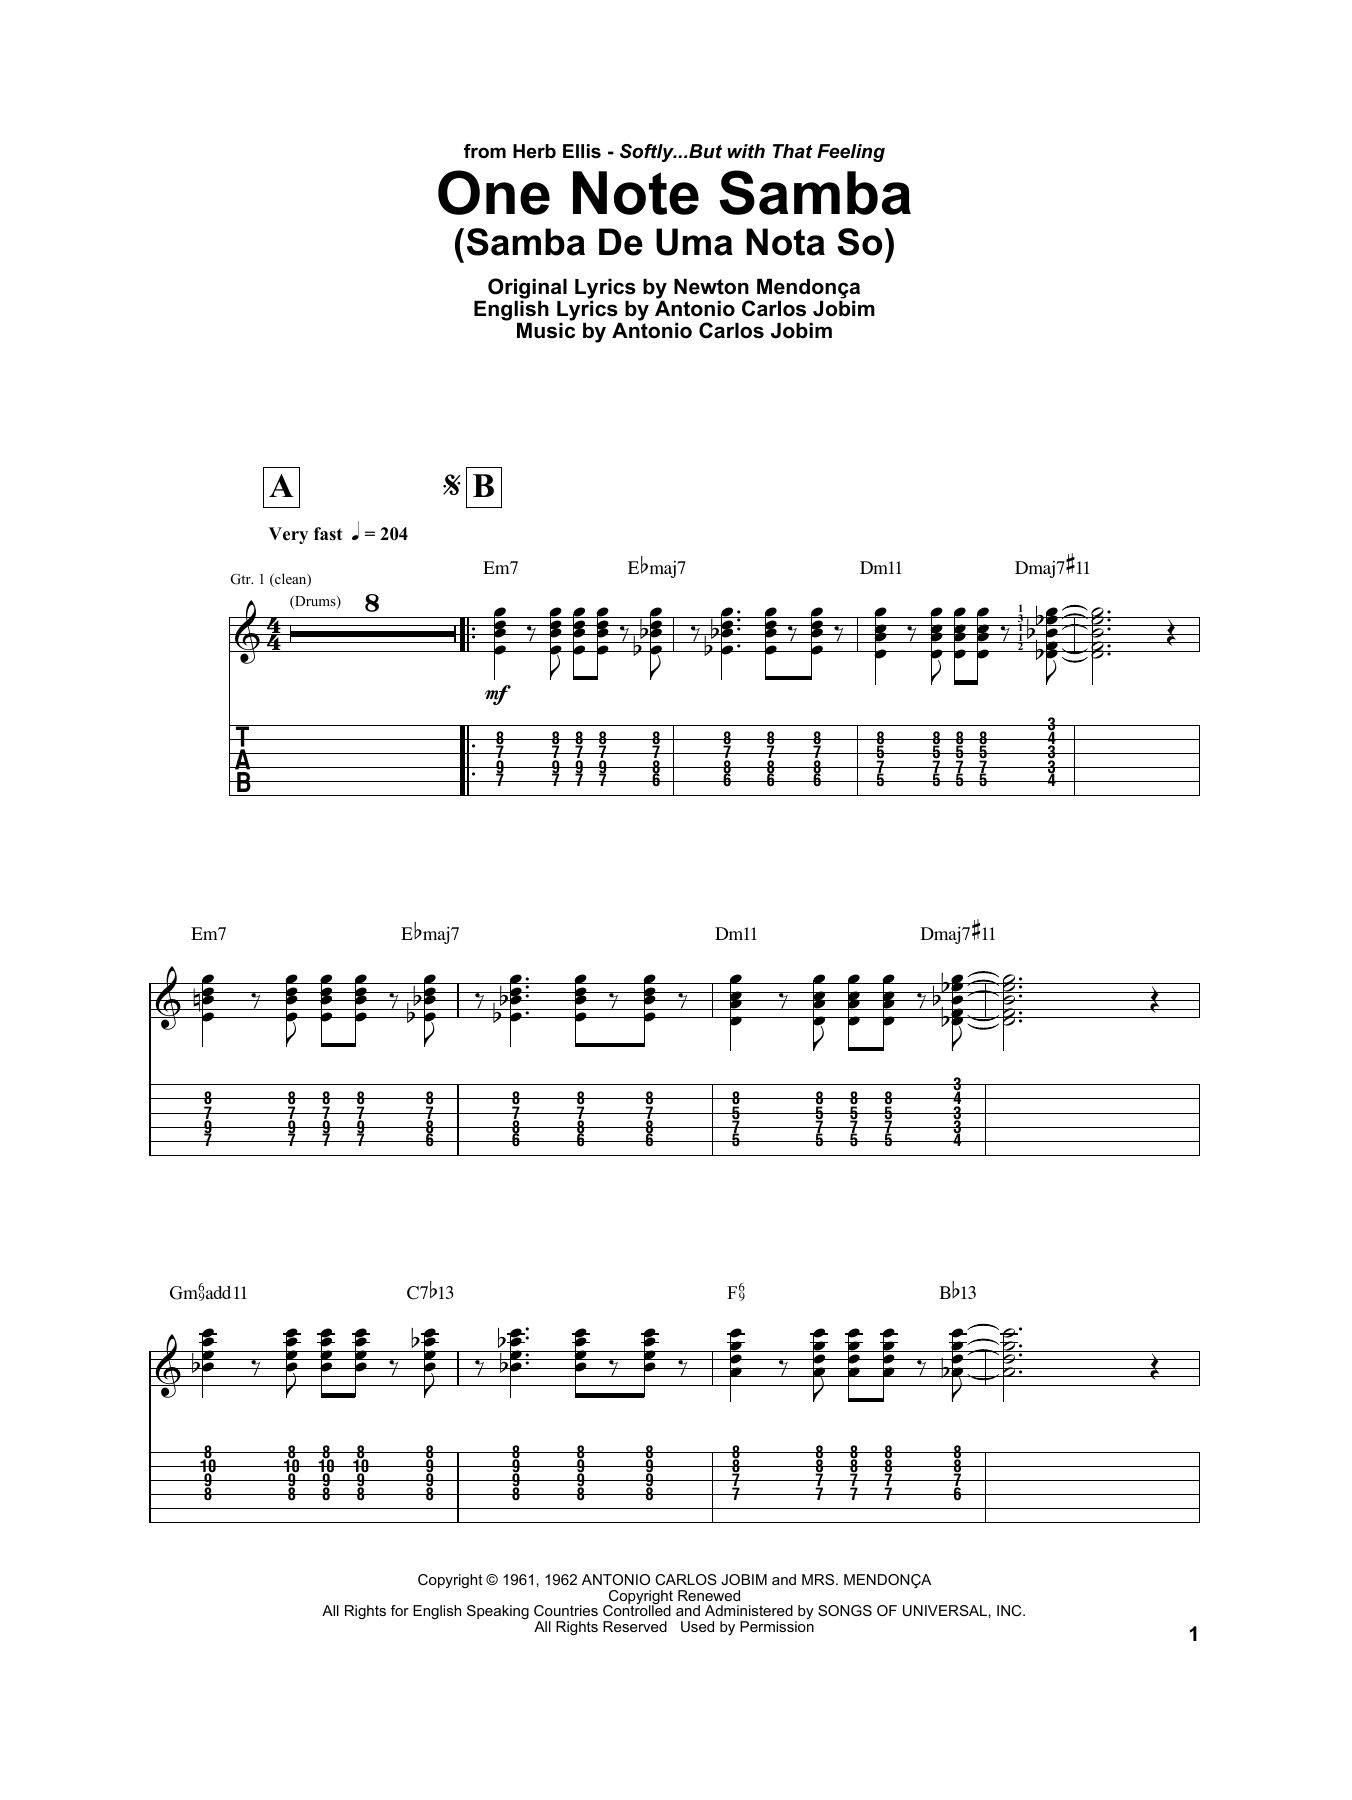 Herb Ellis One Note Samba (Samba De Uma Nota So) Sheet Music Notes & Chords for Electric Guitar Transcription - Download or Print PDF